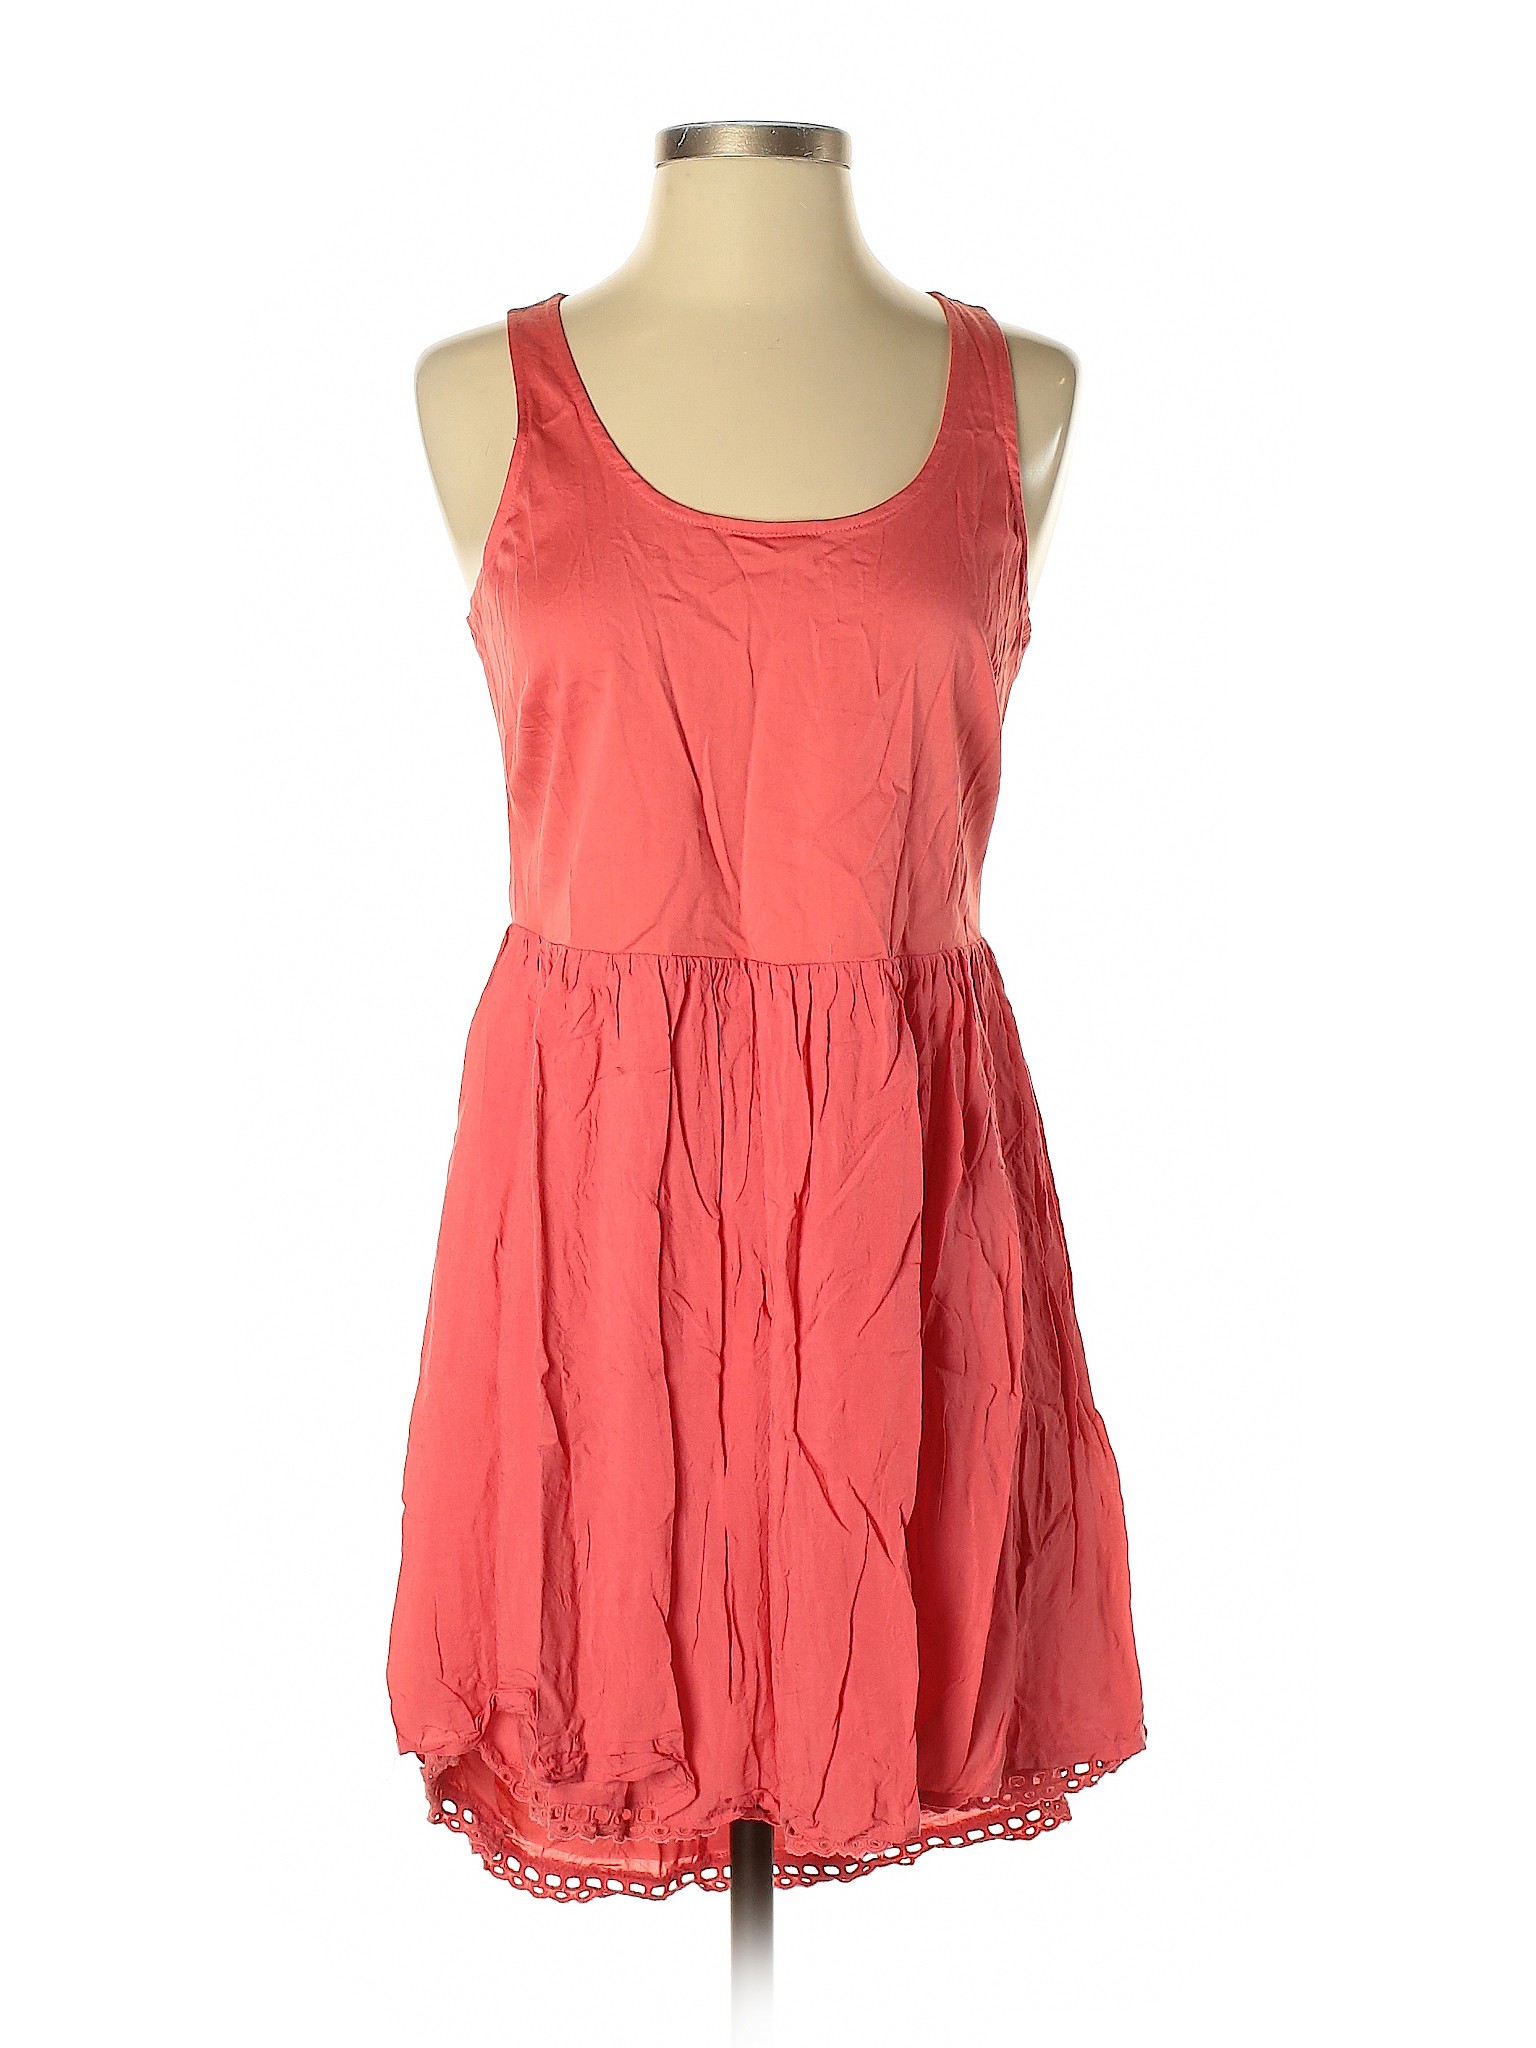 Altar'd State Women Pink Casual Dress S | eBay